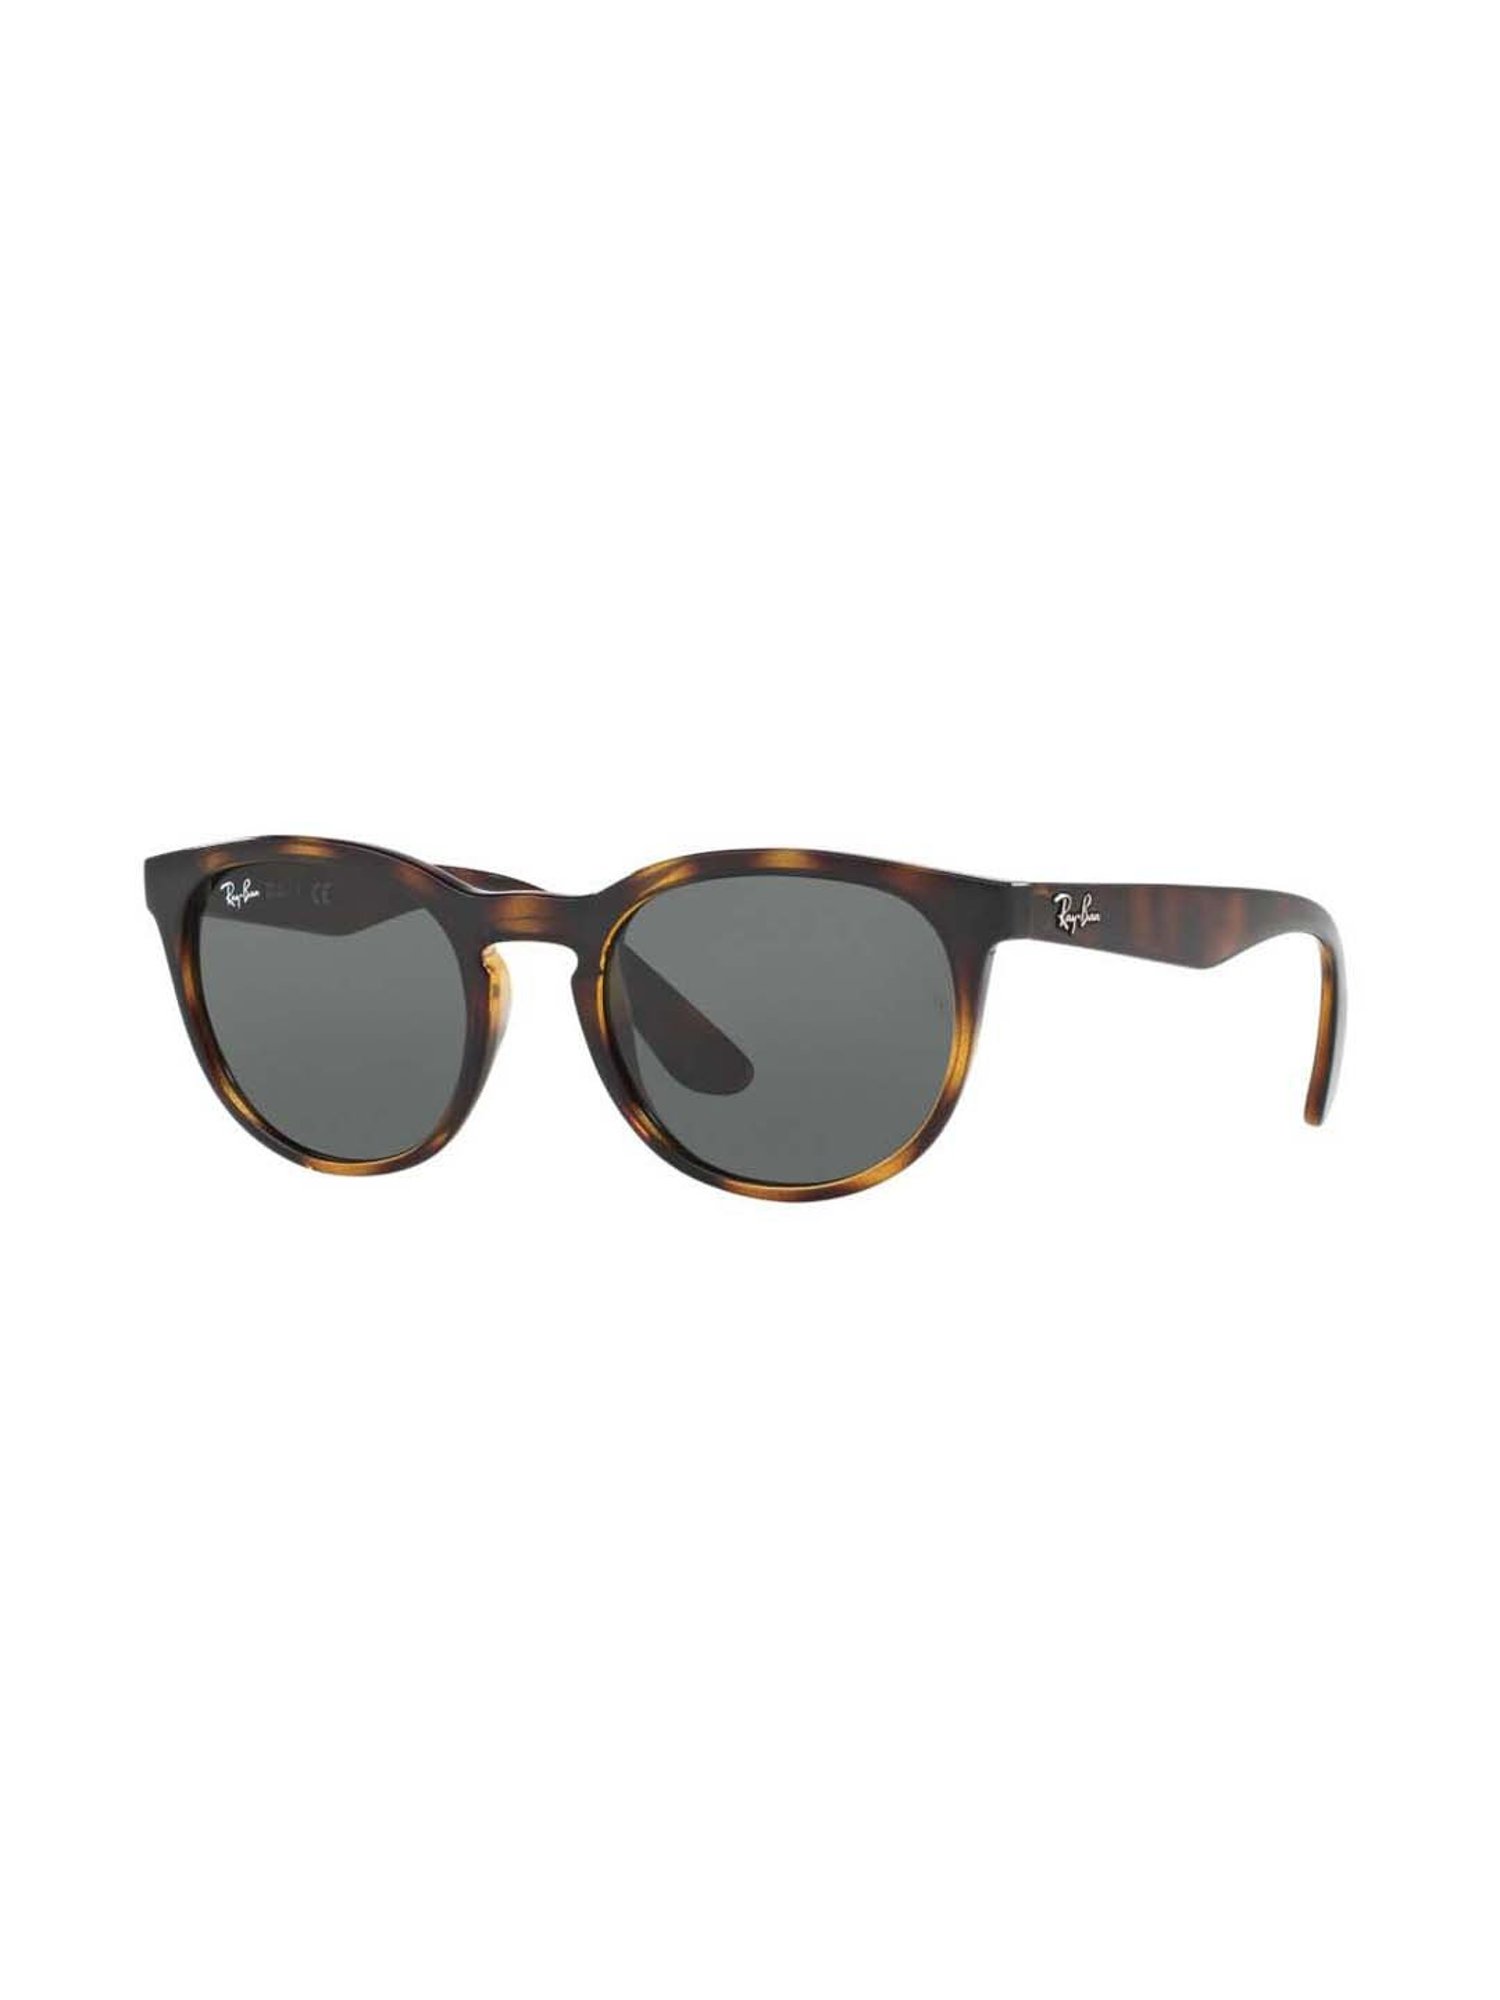 Buy Ray-Ban Ray-Ban Sunglasses | Black Sunglasses ( 0Rb3715M | Square |  Black Frame | Grey Lens ) Sunglasses Online.